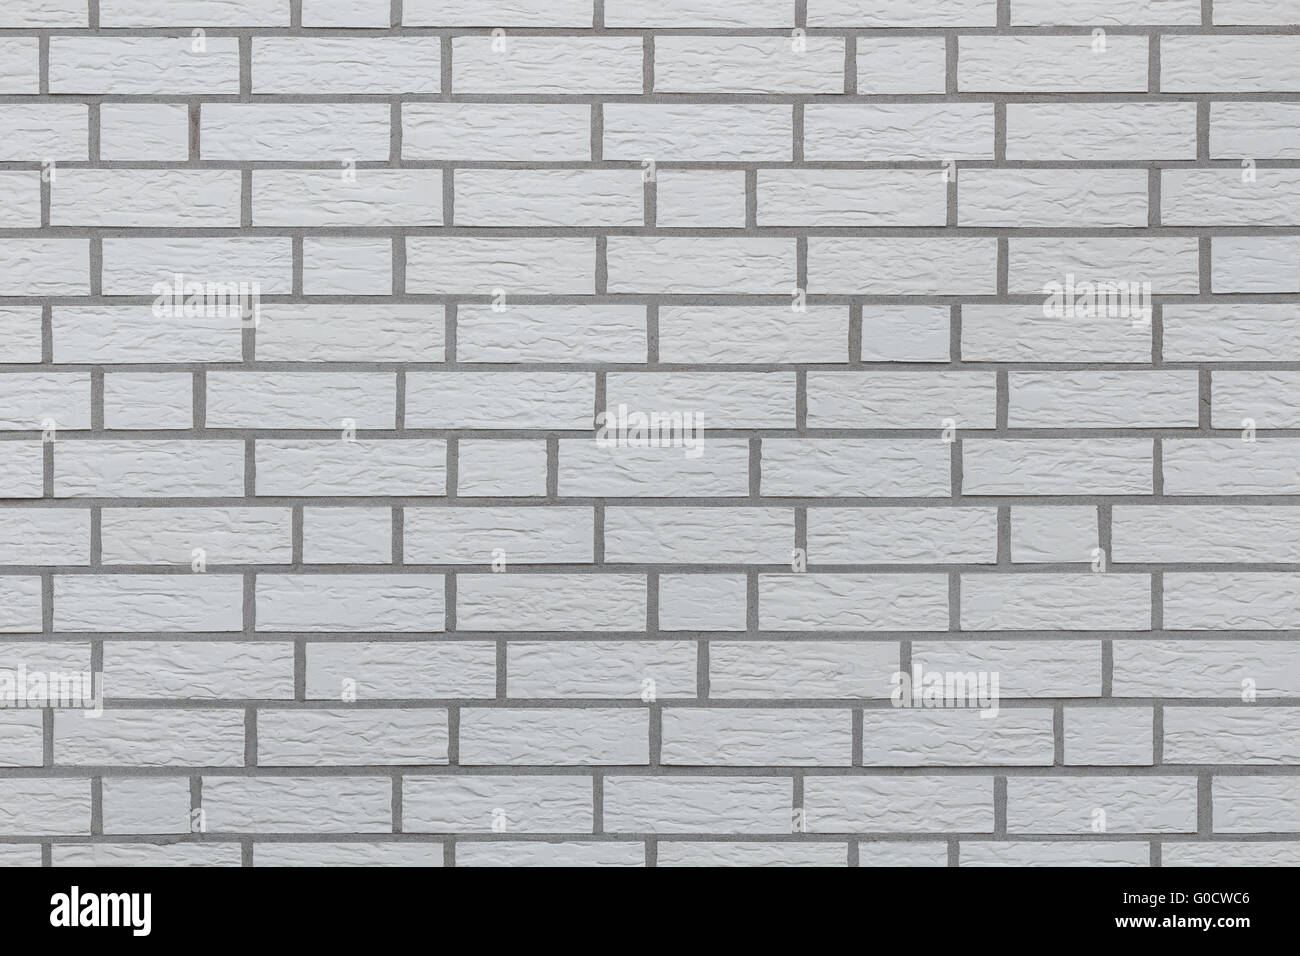 White brickwork Stock Photo